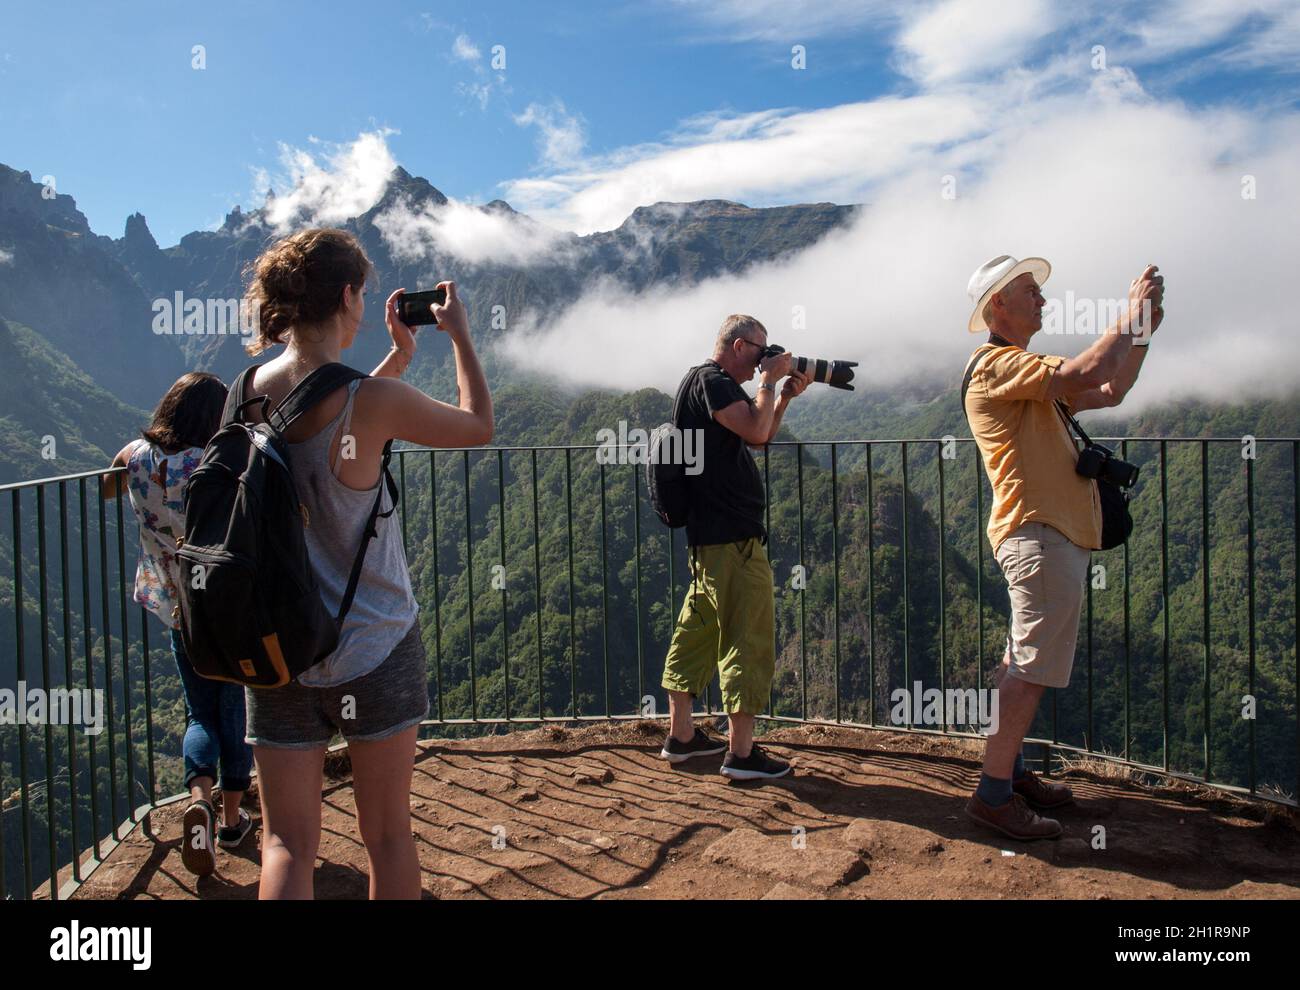 Miradouro dos Balcoes, Madeira, Portugal - September 9, 2016: Tourists at a viewpoint, Miradouro dos Balcoes at 880m high, Madeira Island Stock Photo